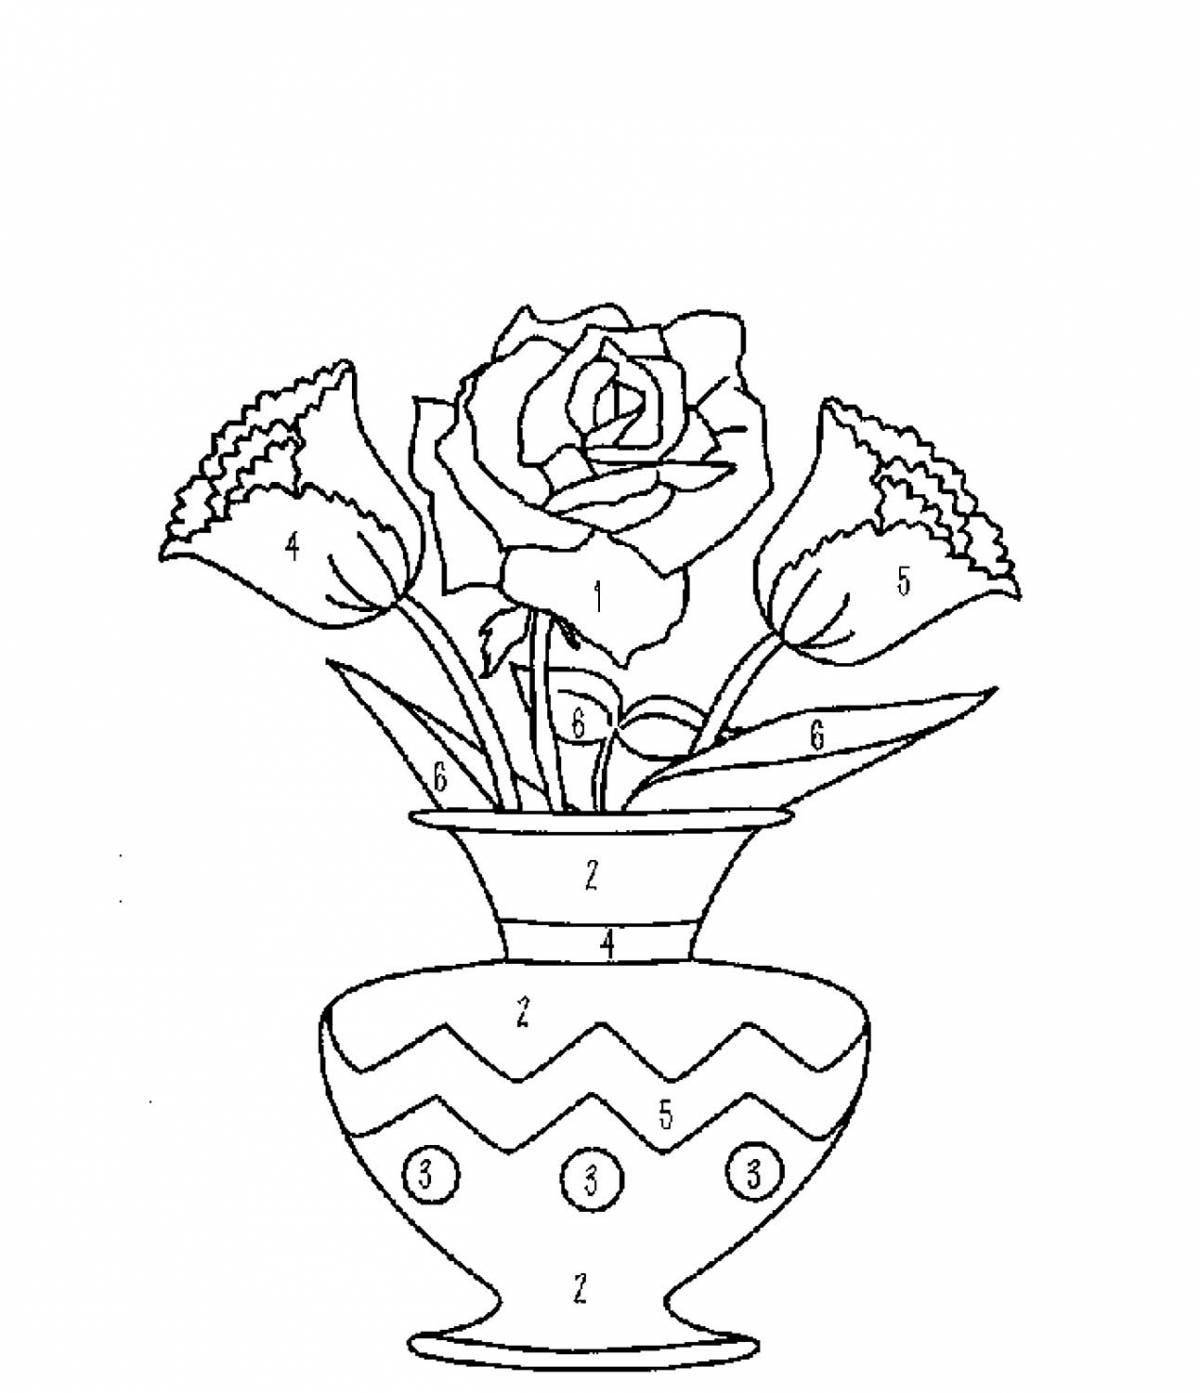 Exquisite flower vase for children aged 8-9